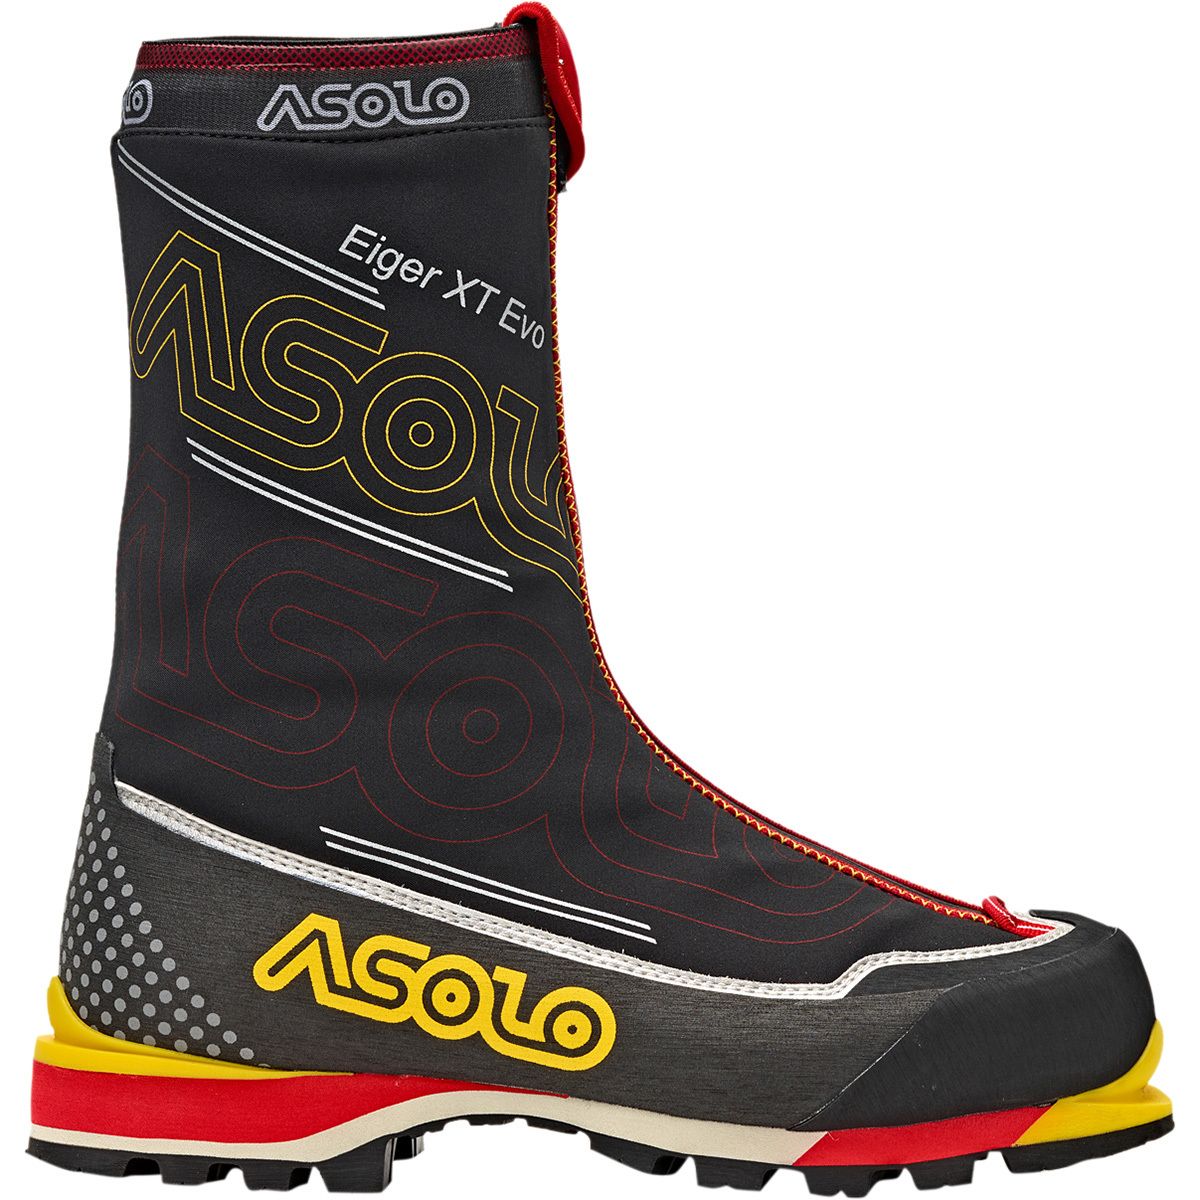 Asolo Eiger XT Evo GV Mountaineering Boot - Men's